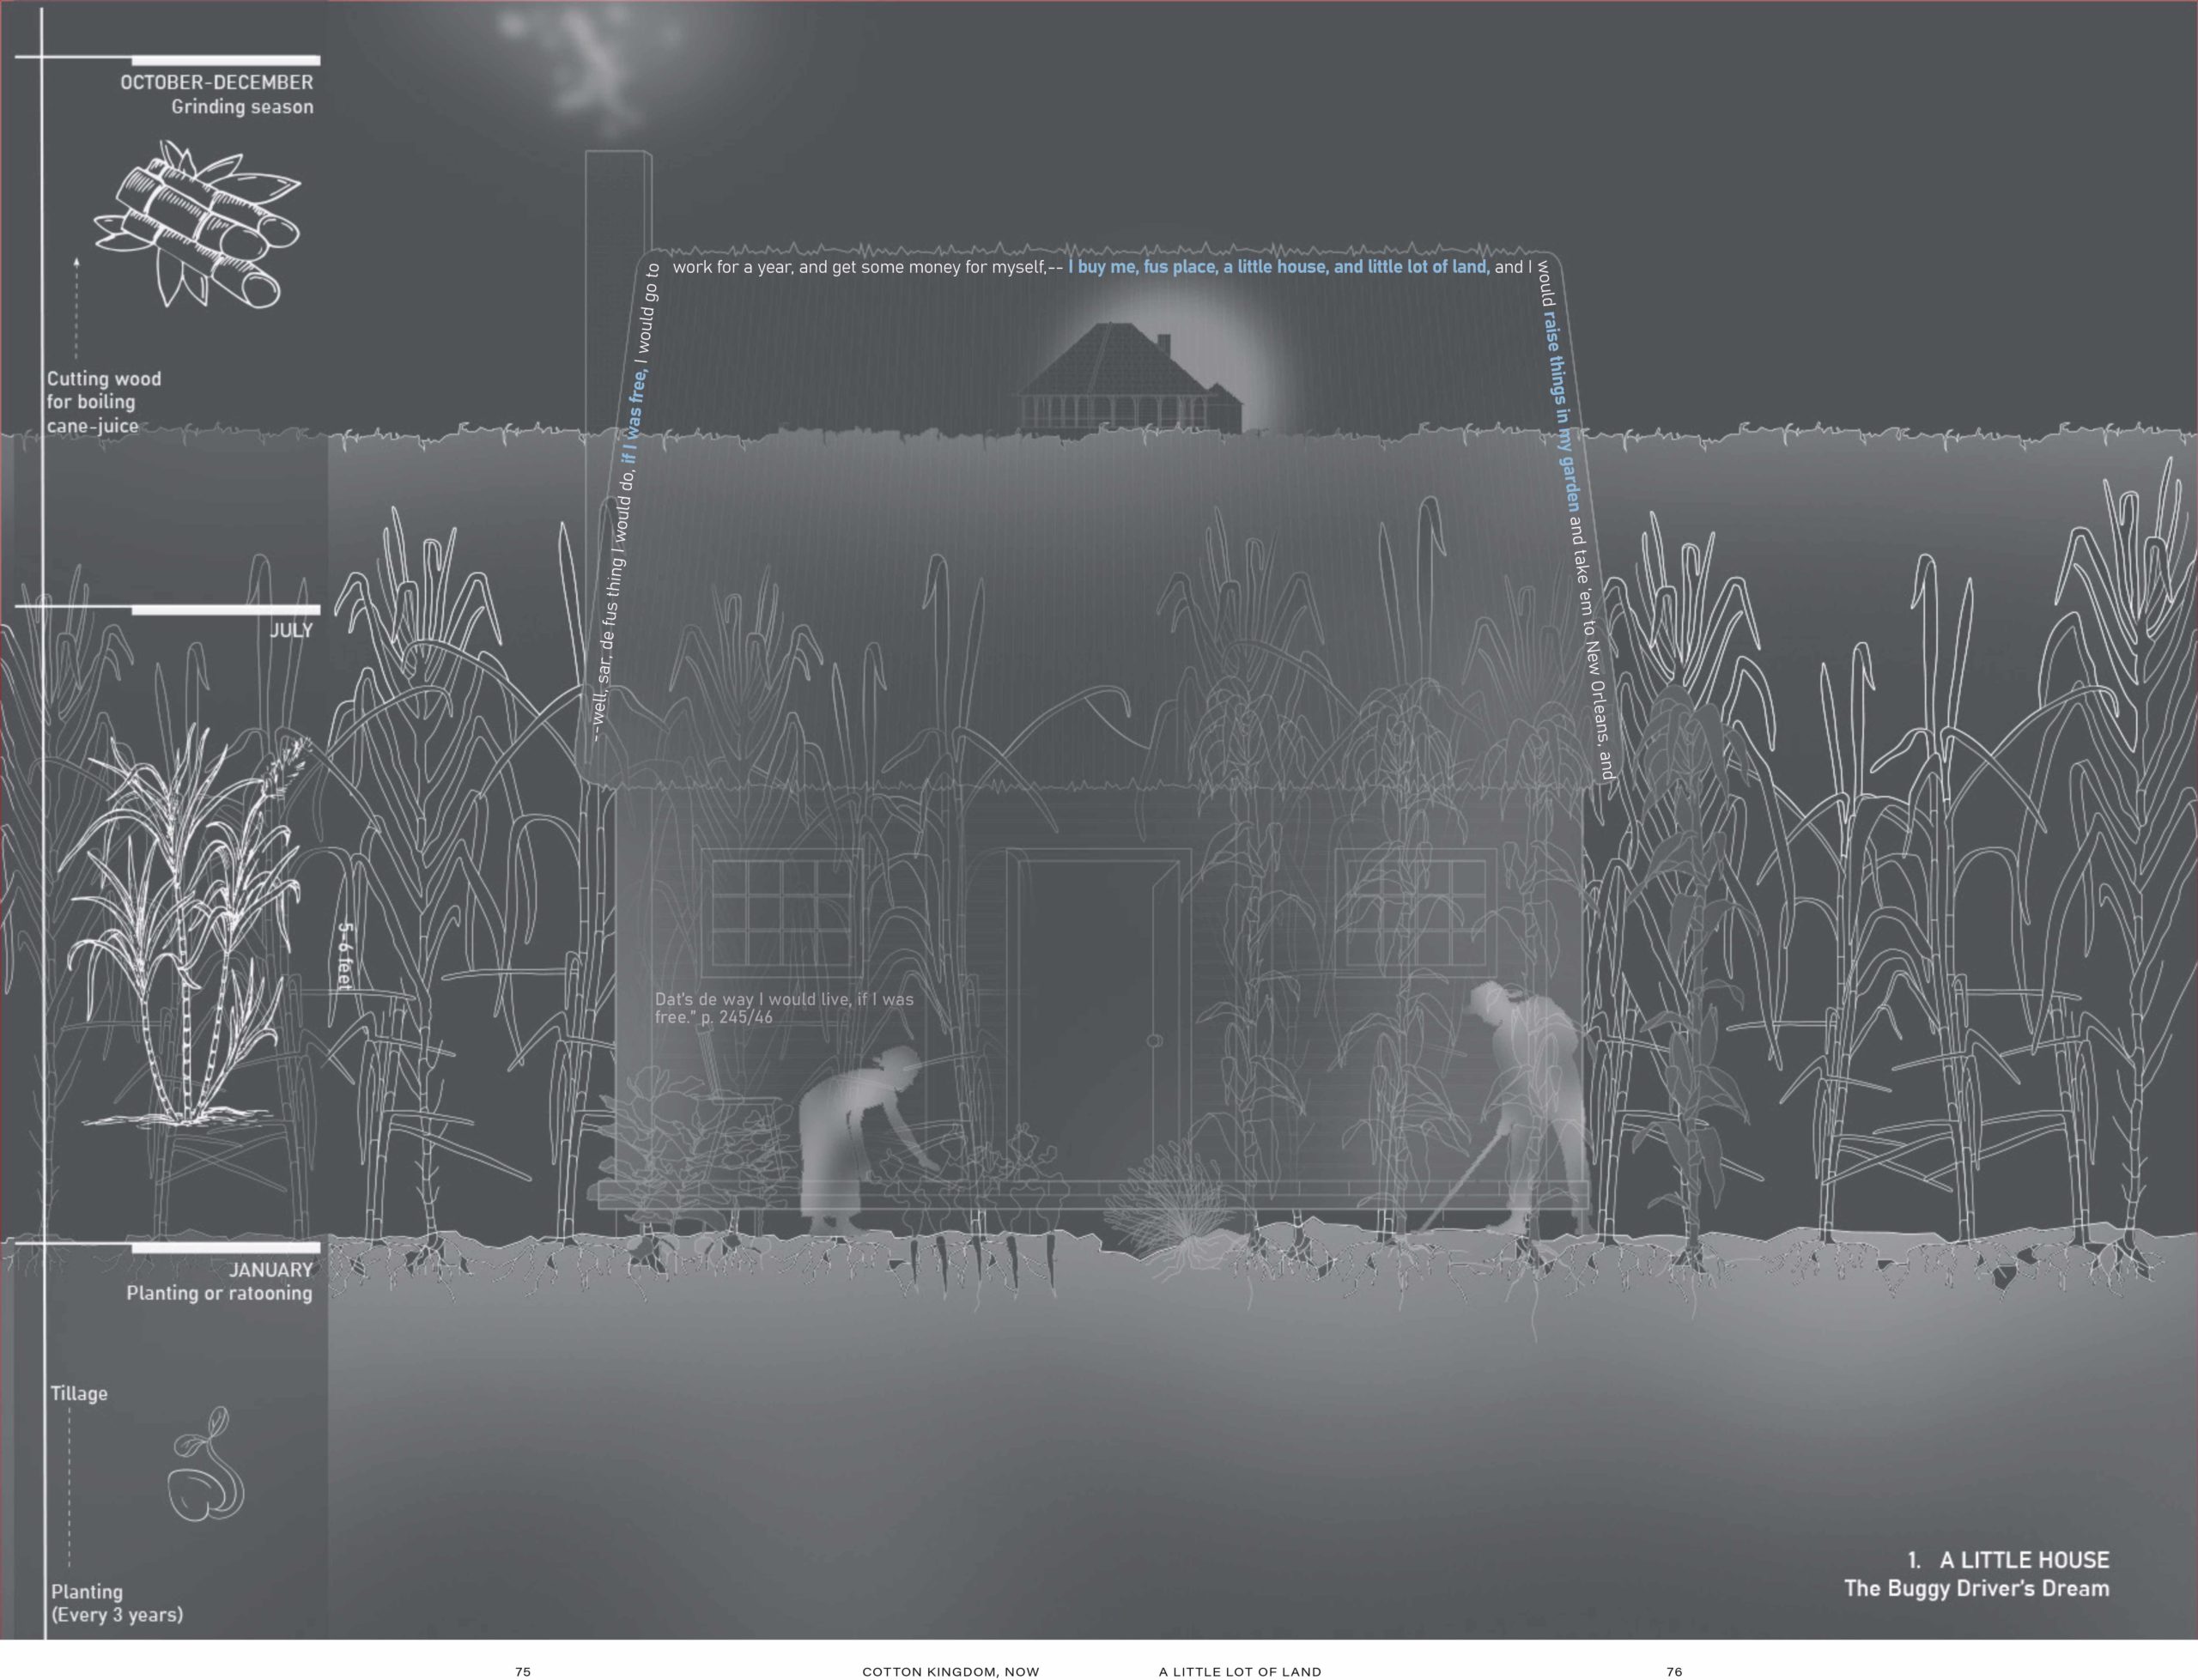 Dark white on dark gray image diagramming plantation farming